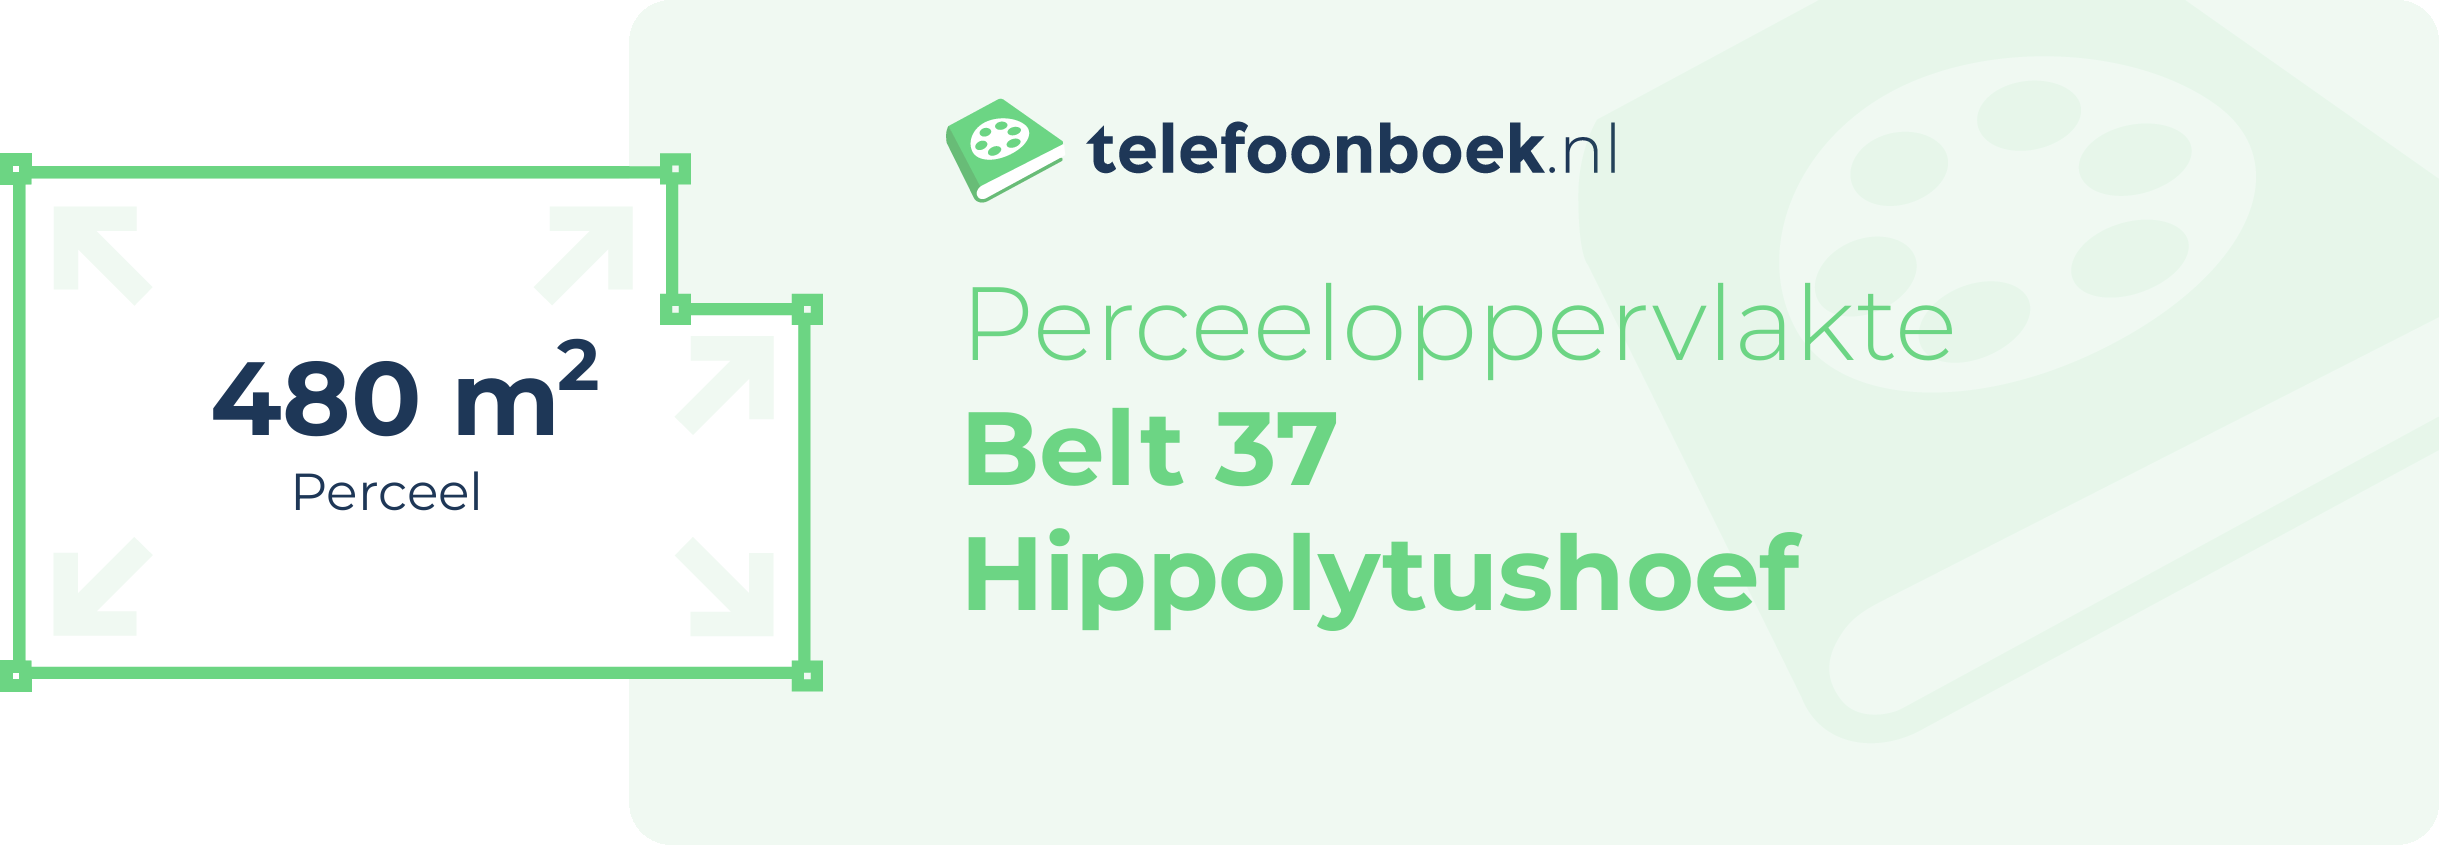 Perceeloppervlakte Belt 37 Hippolytushoef